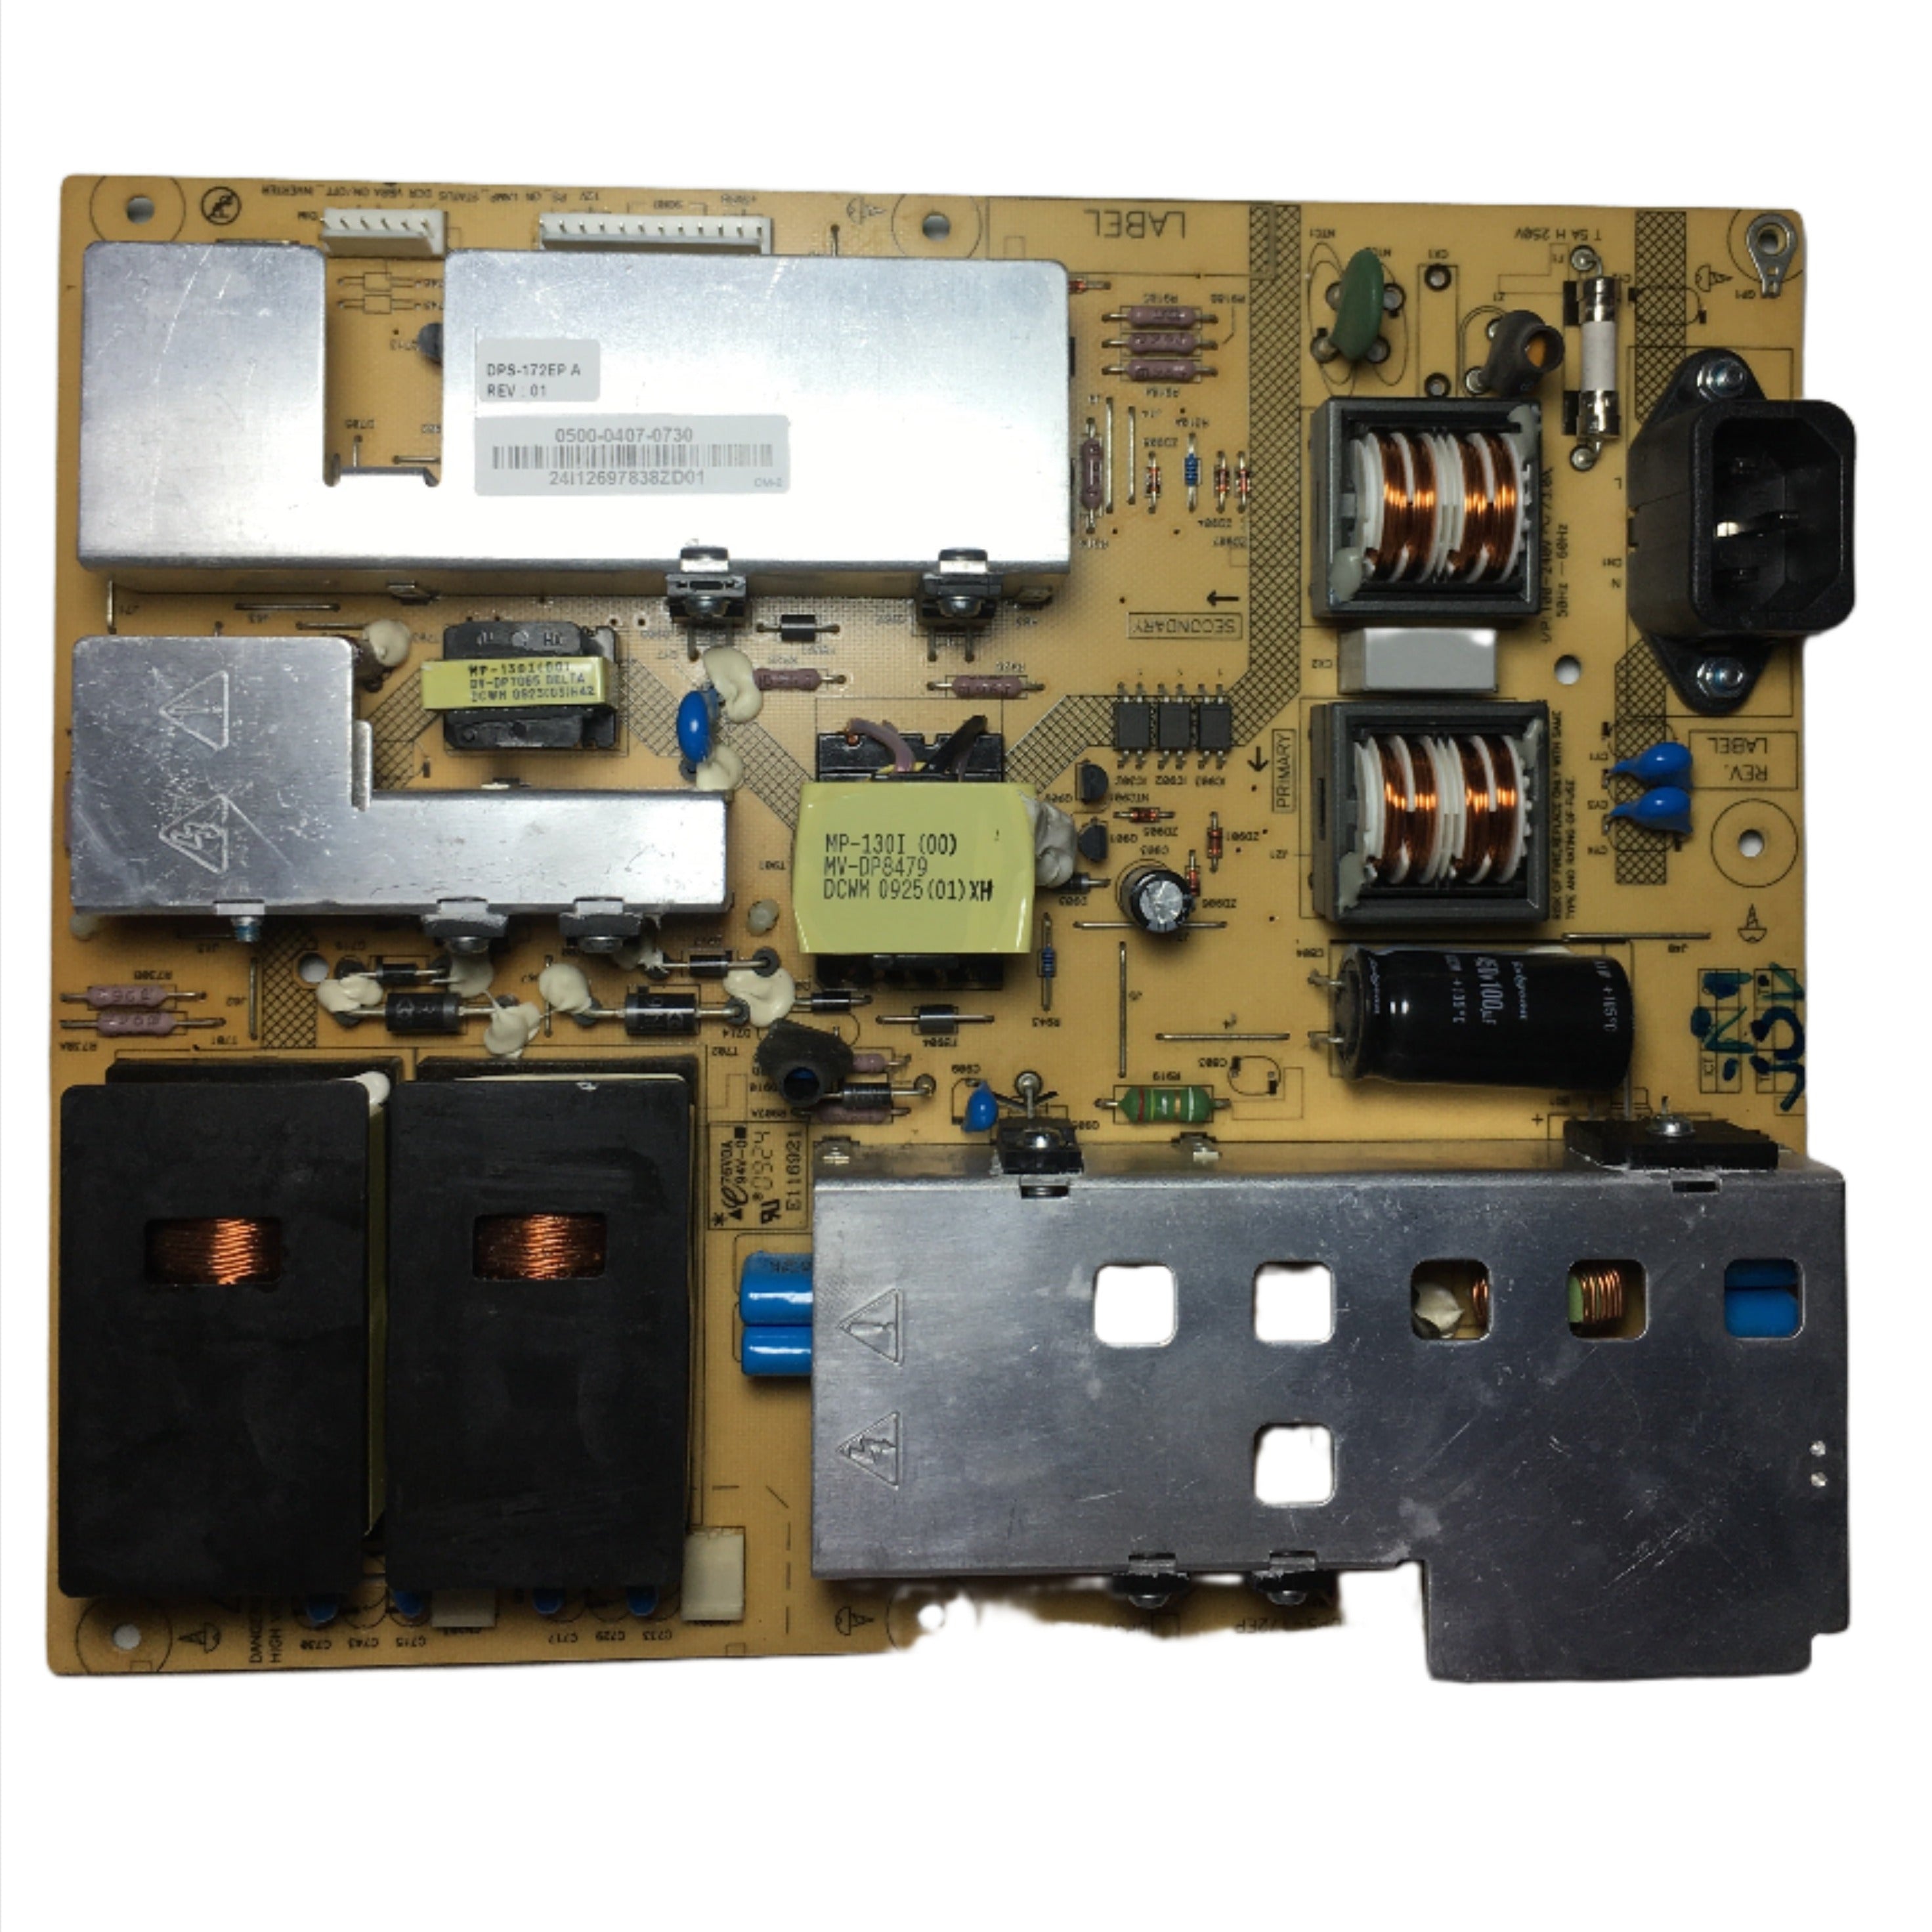 Vizio 0500-0407-0730 (DPS-172EP A) Power Supply / Backlight Inverter